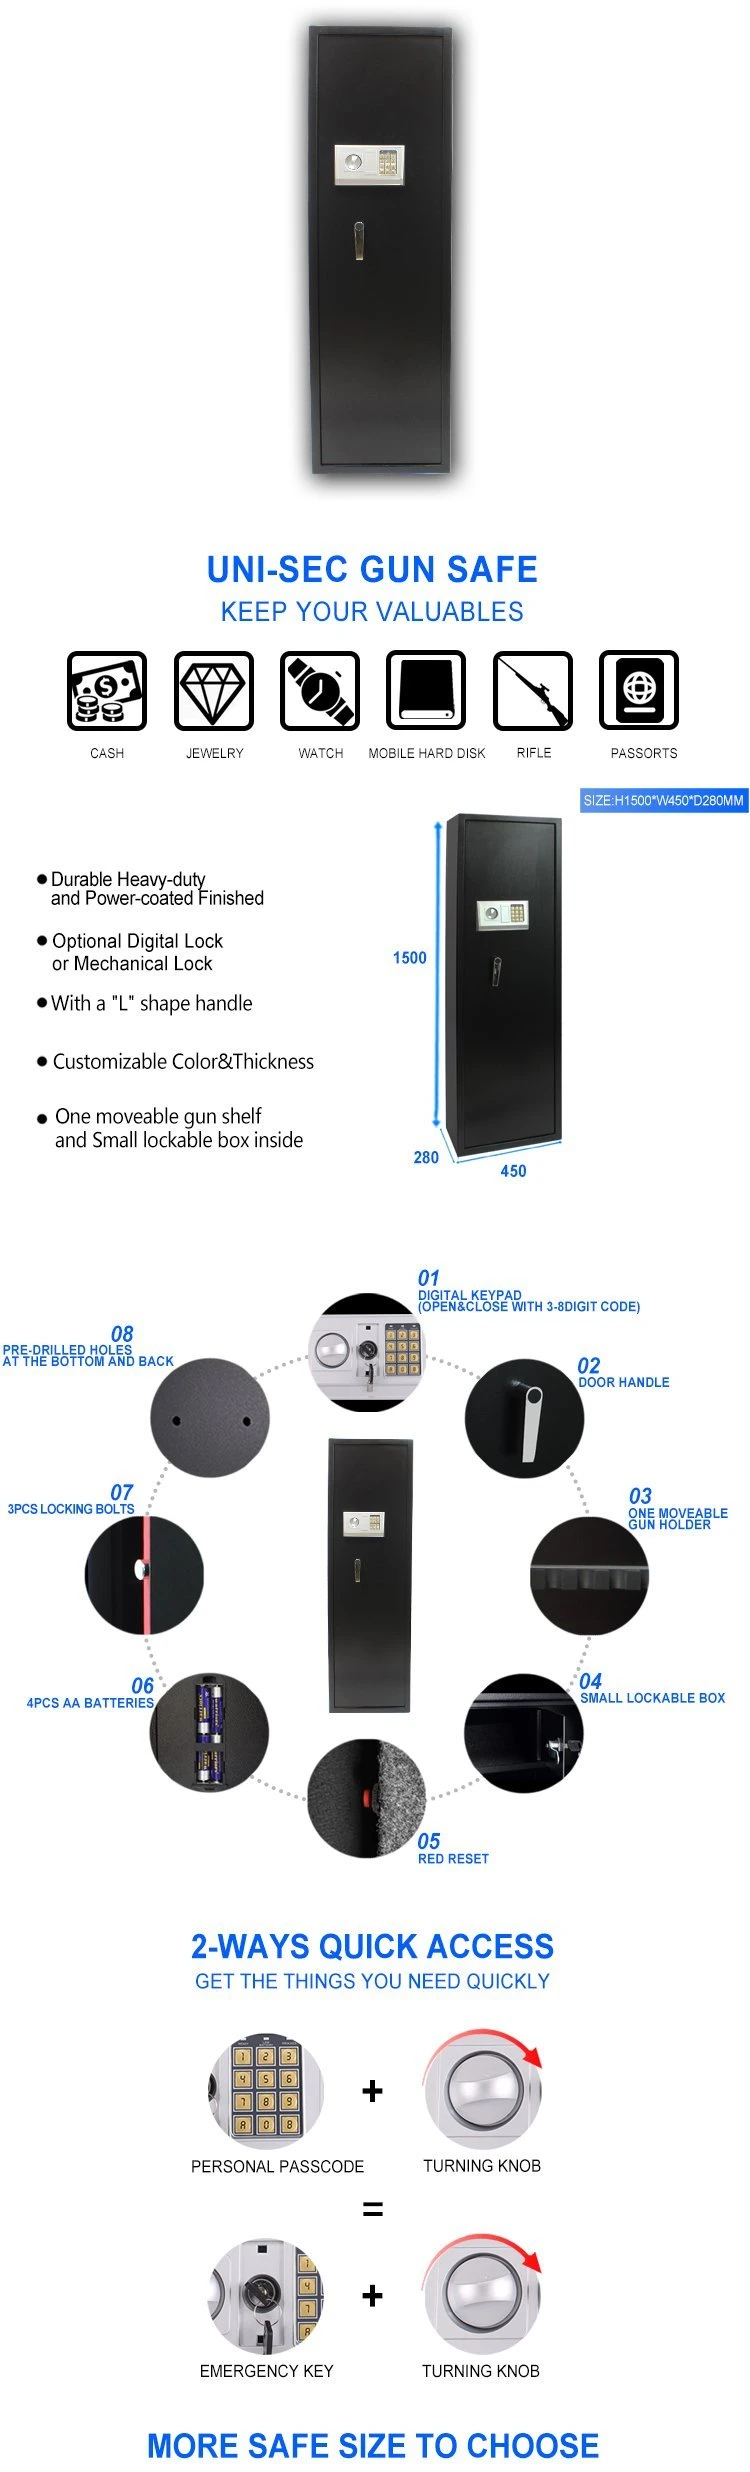 Uni-Sec New Fashion Heavy Duty Digital Safe Box Manufacturer in China (USG-1545EA10)